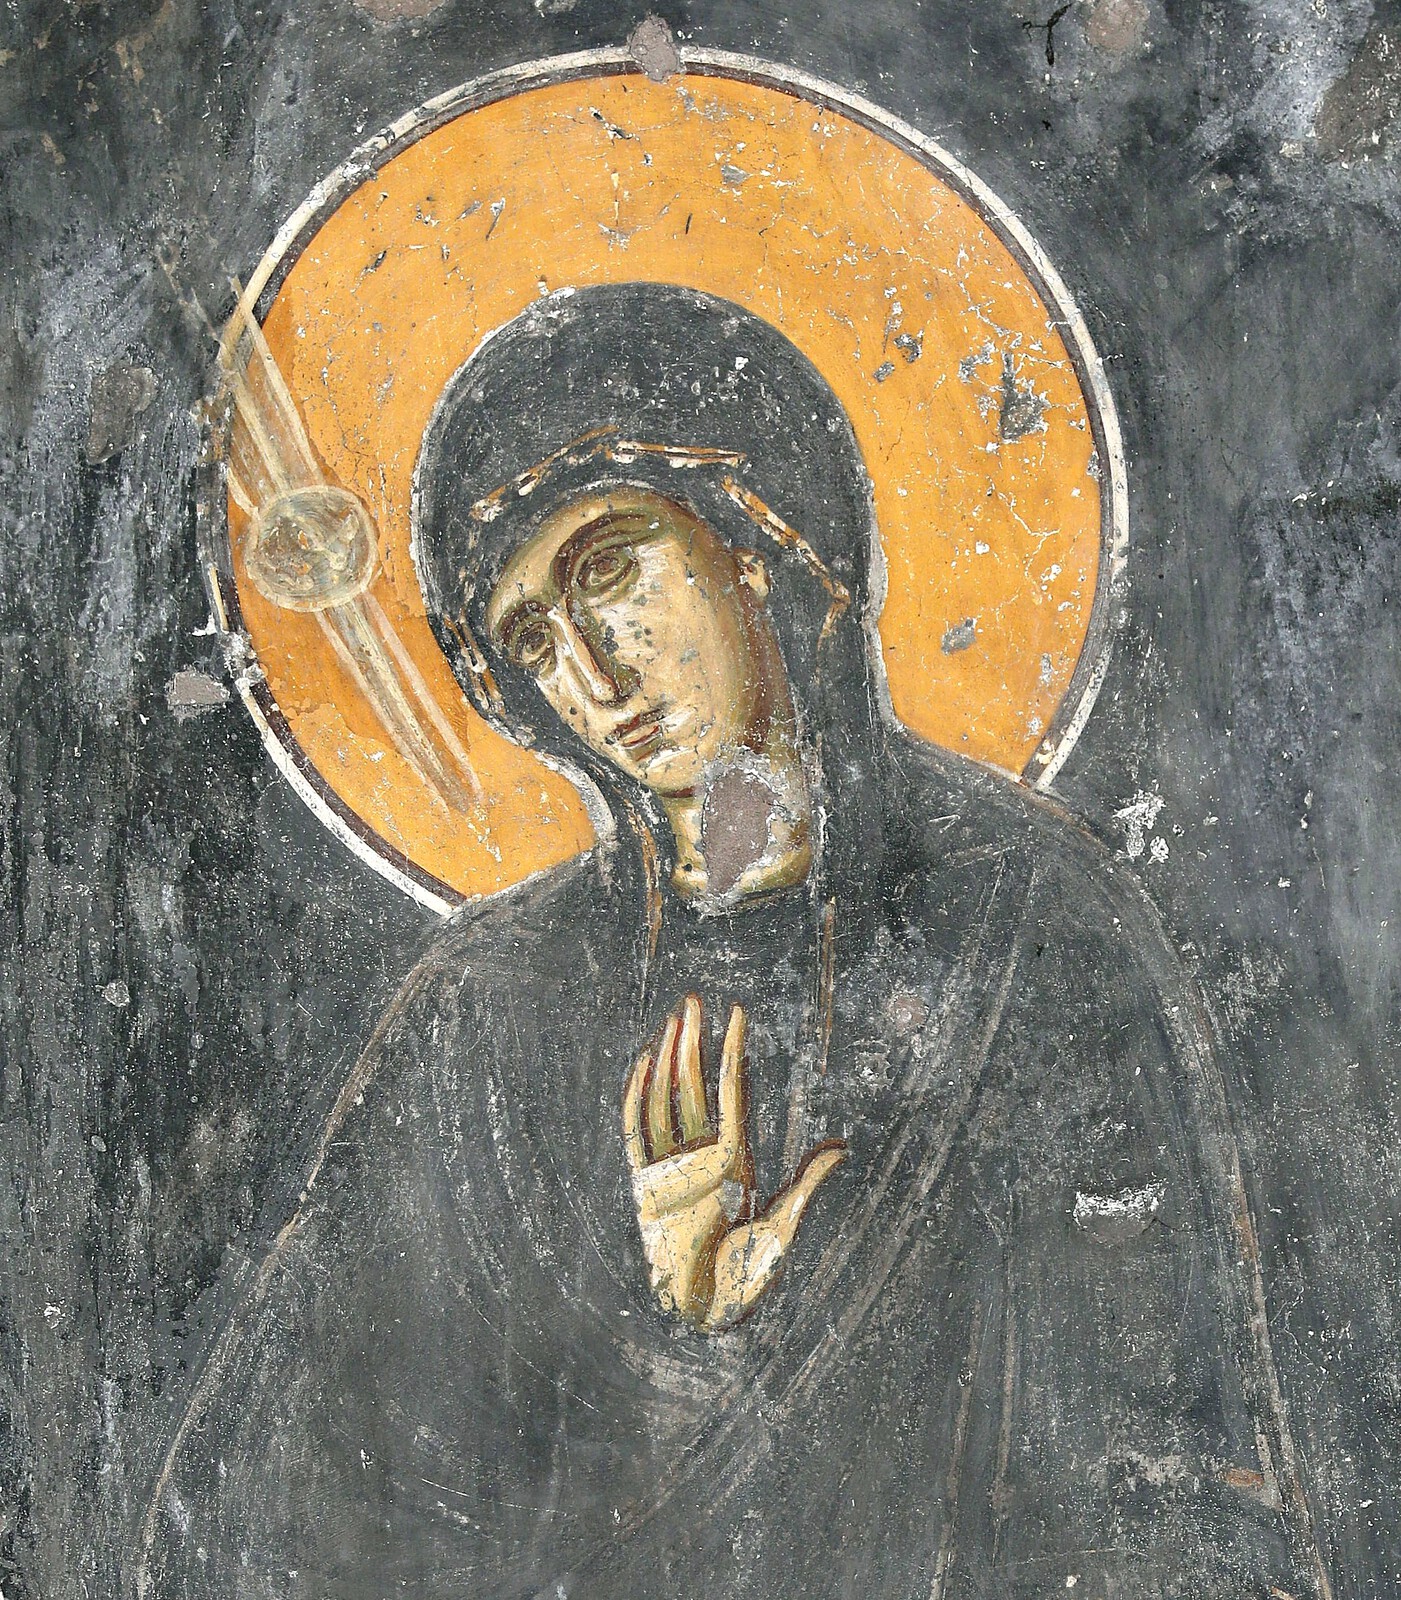 The Annunciation, detail